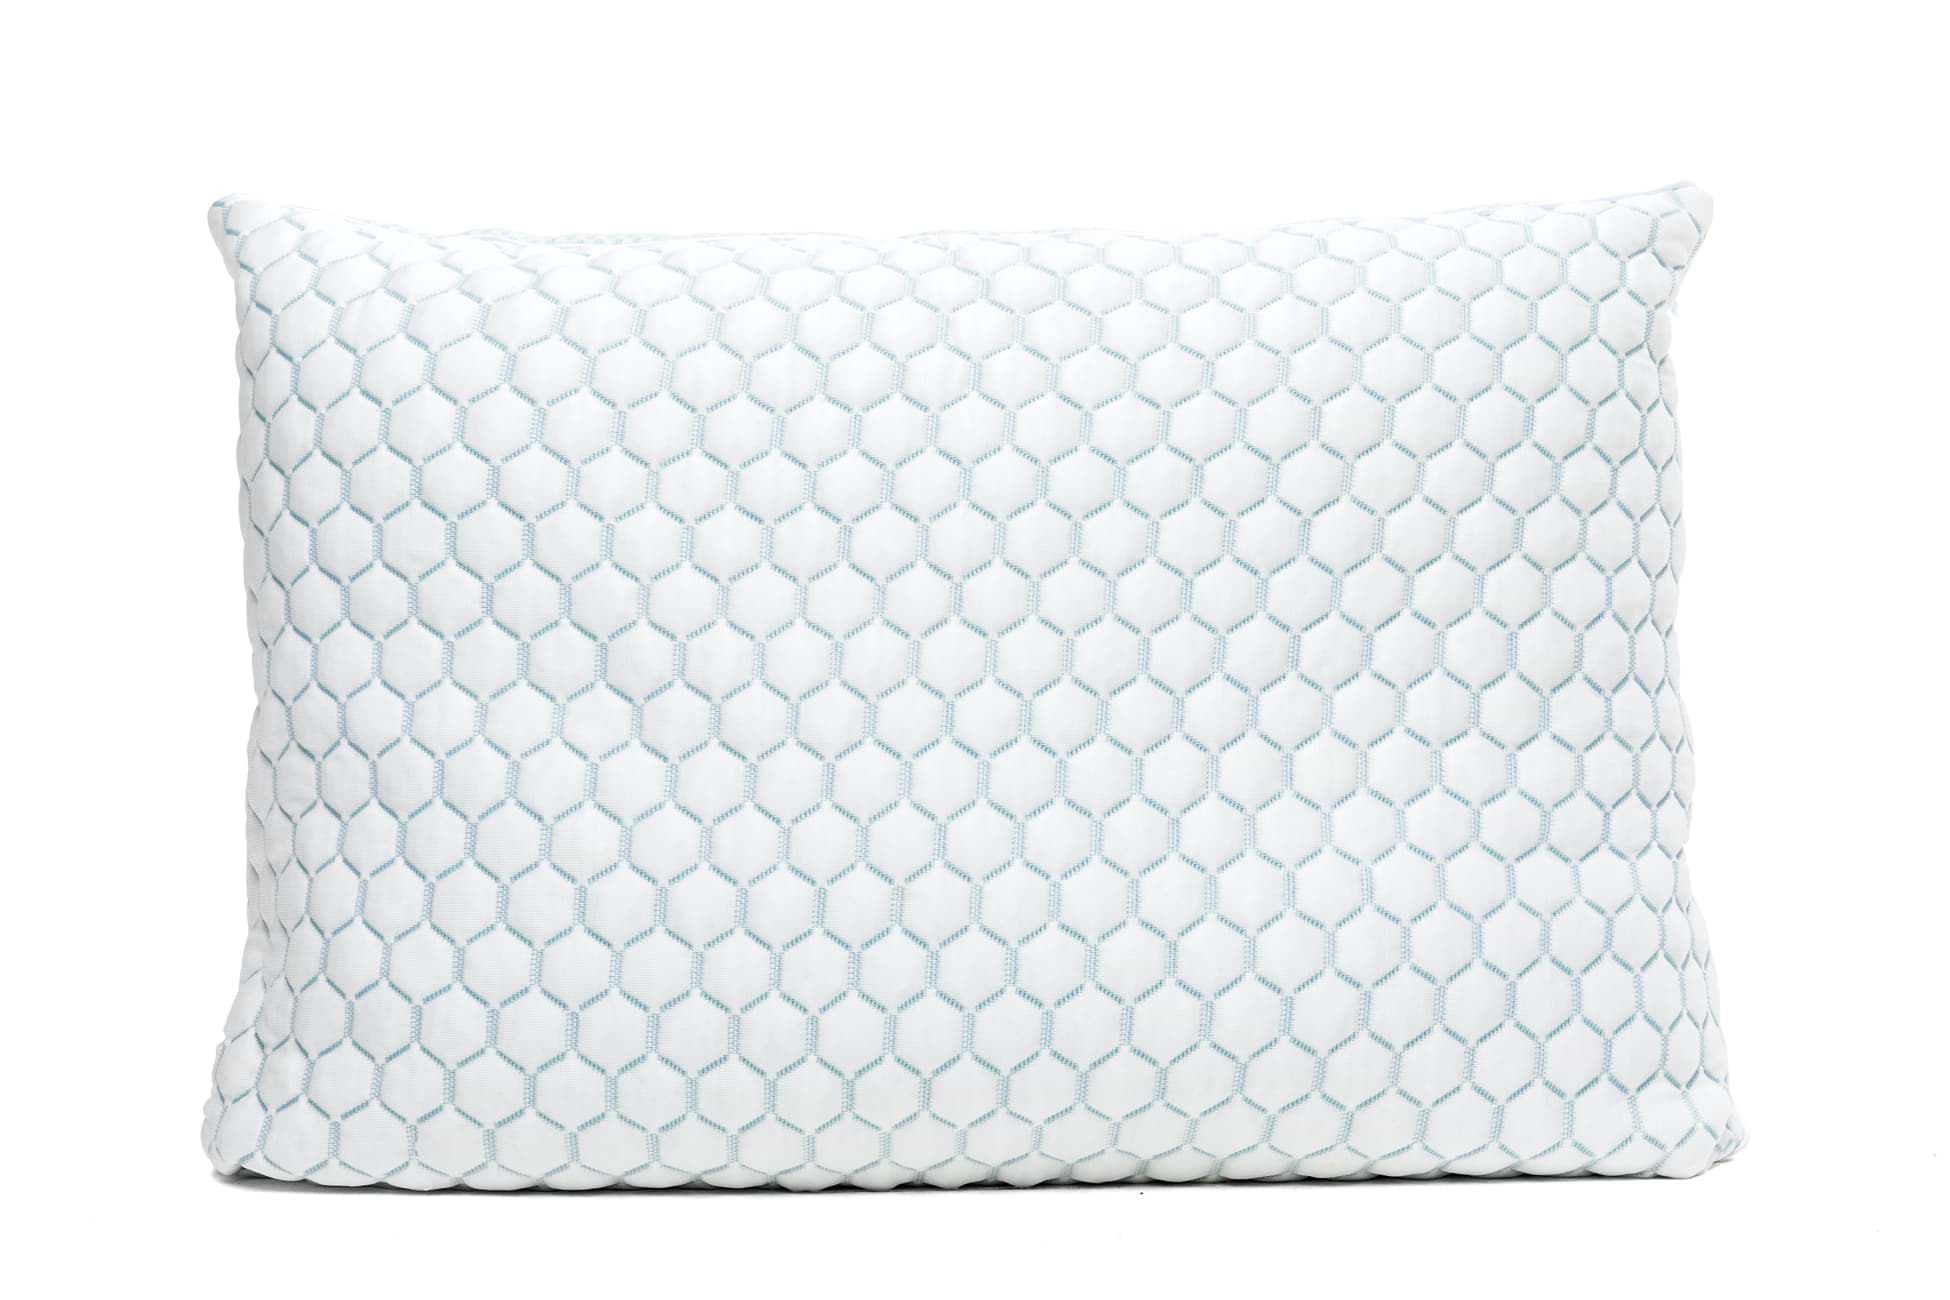 MOLECULET Infinity PRO Adjustable Foam Pillow